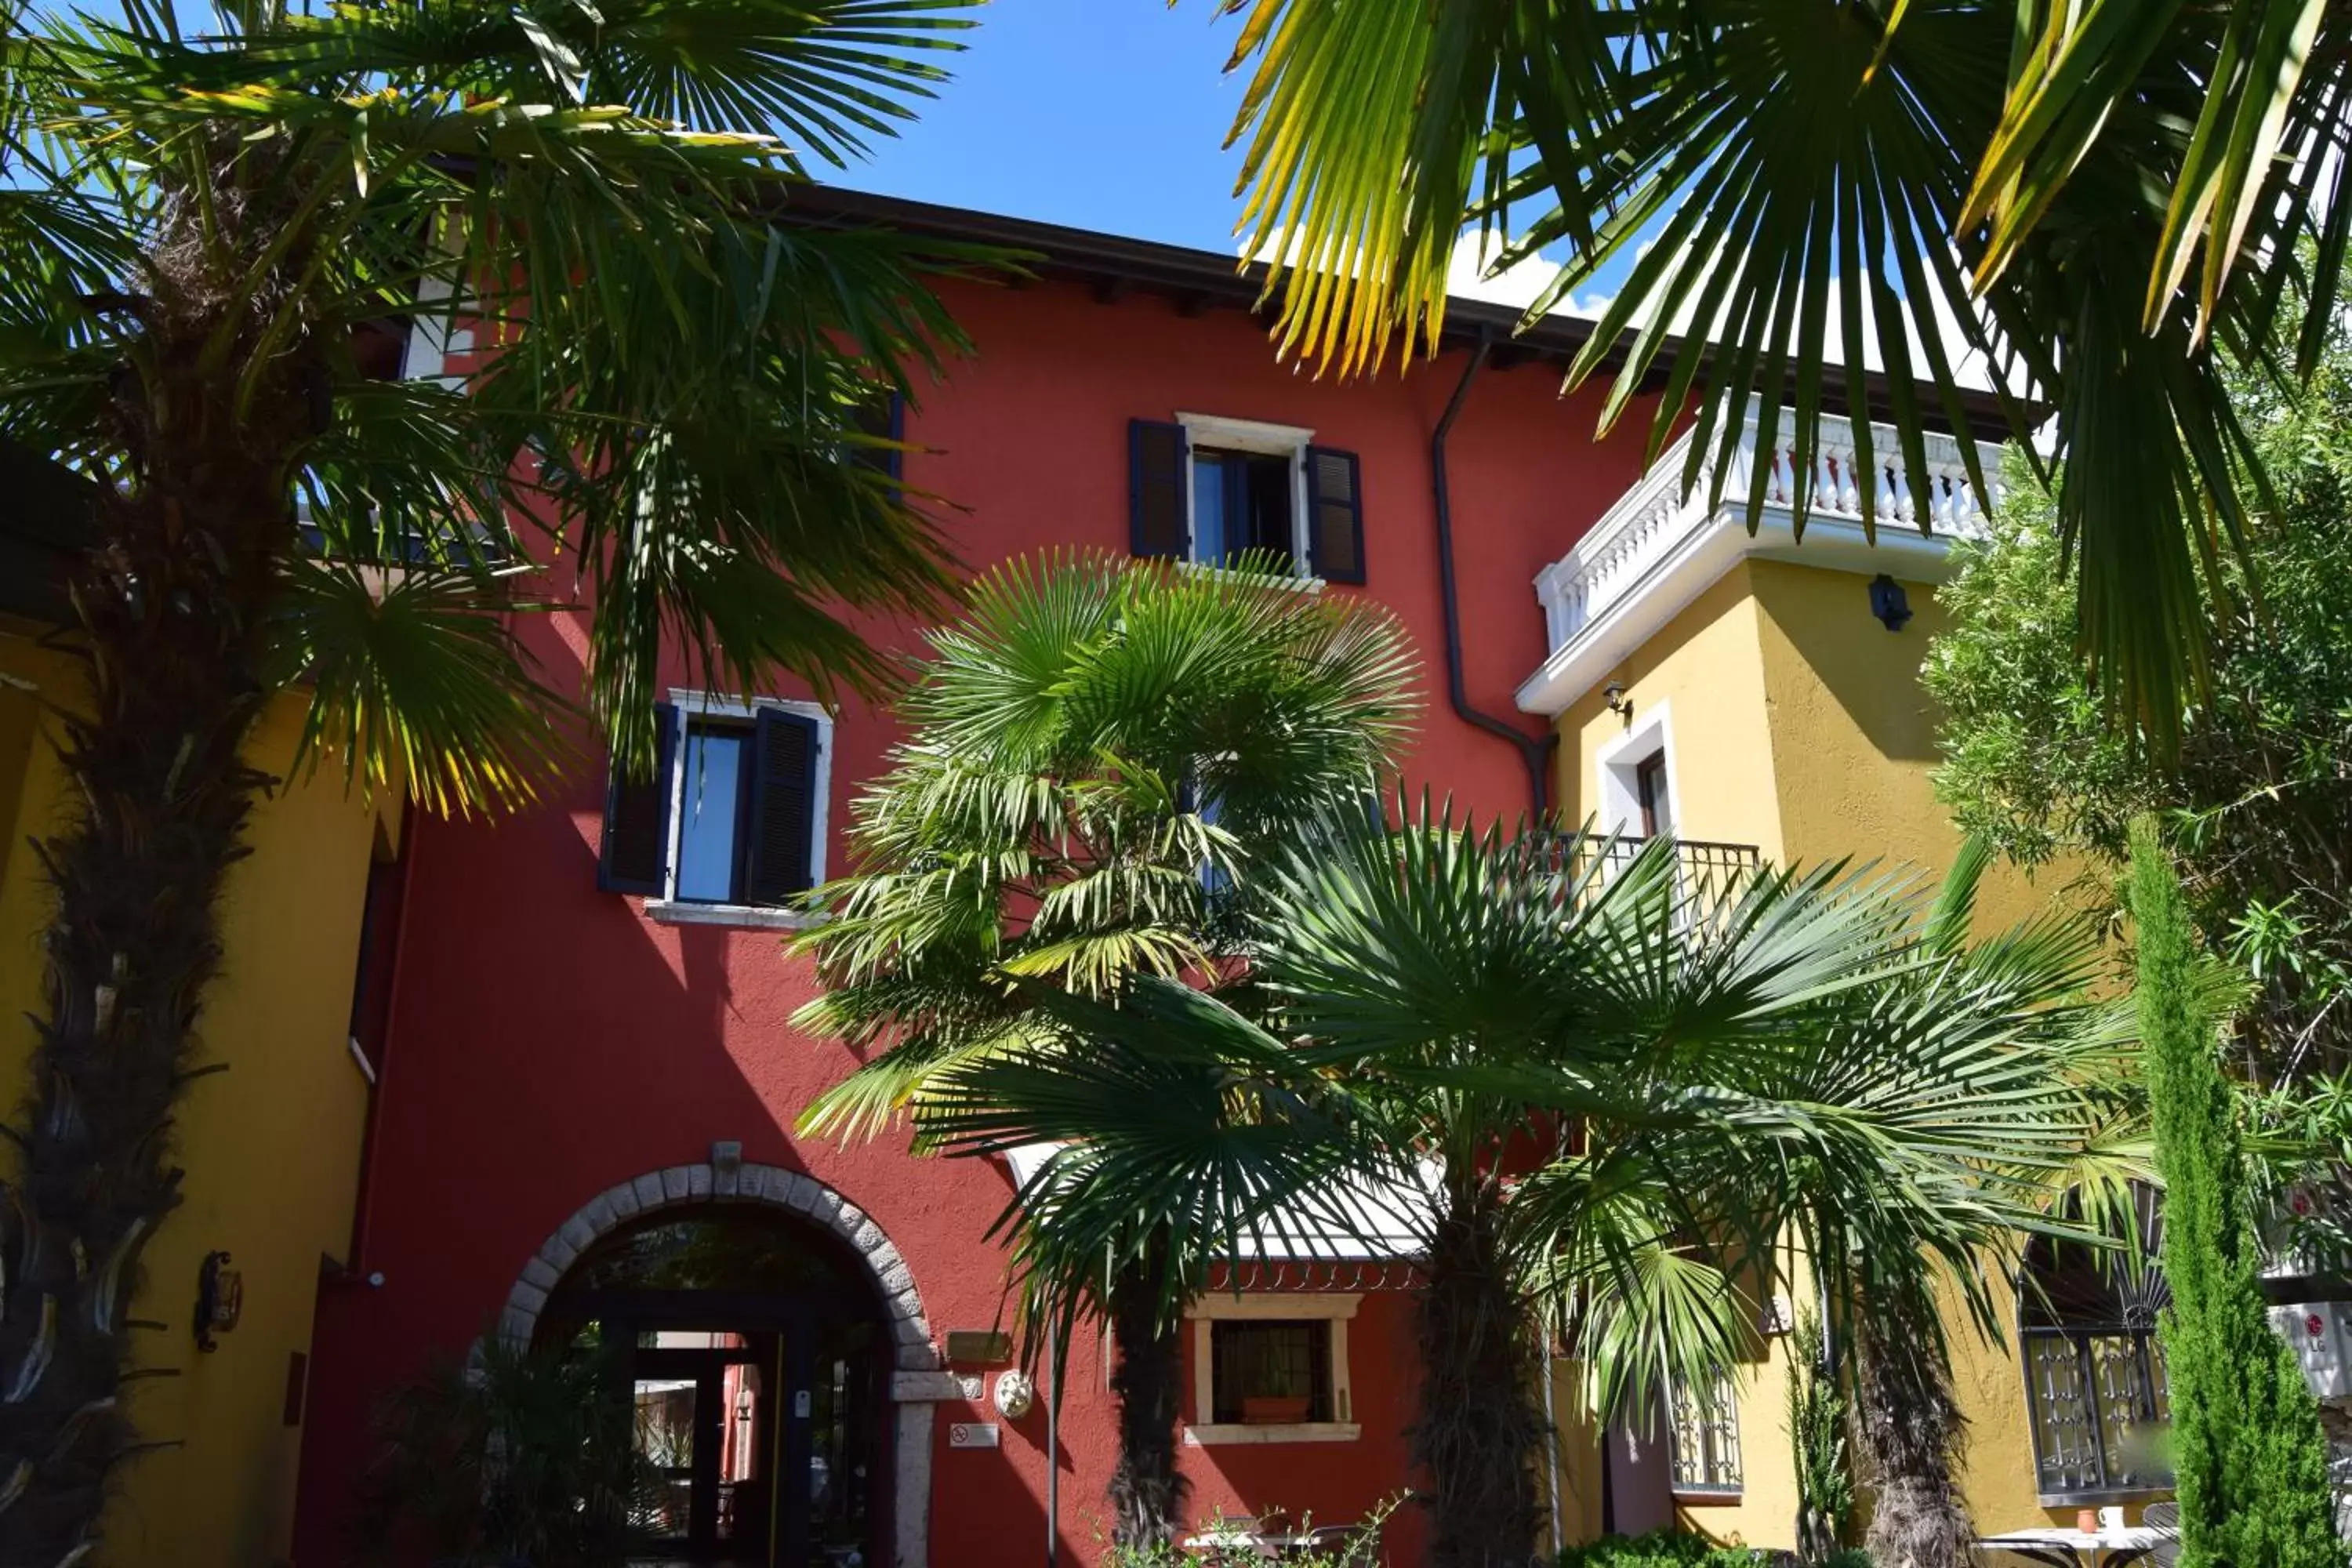 Property building, Facade/Entrance in Residence Segattini